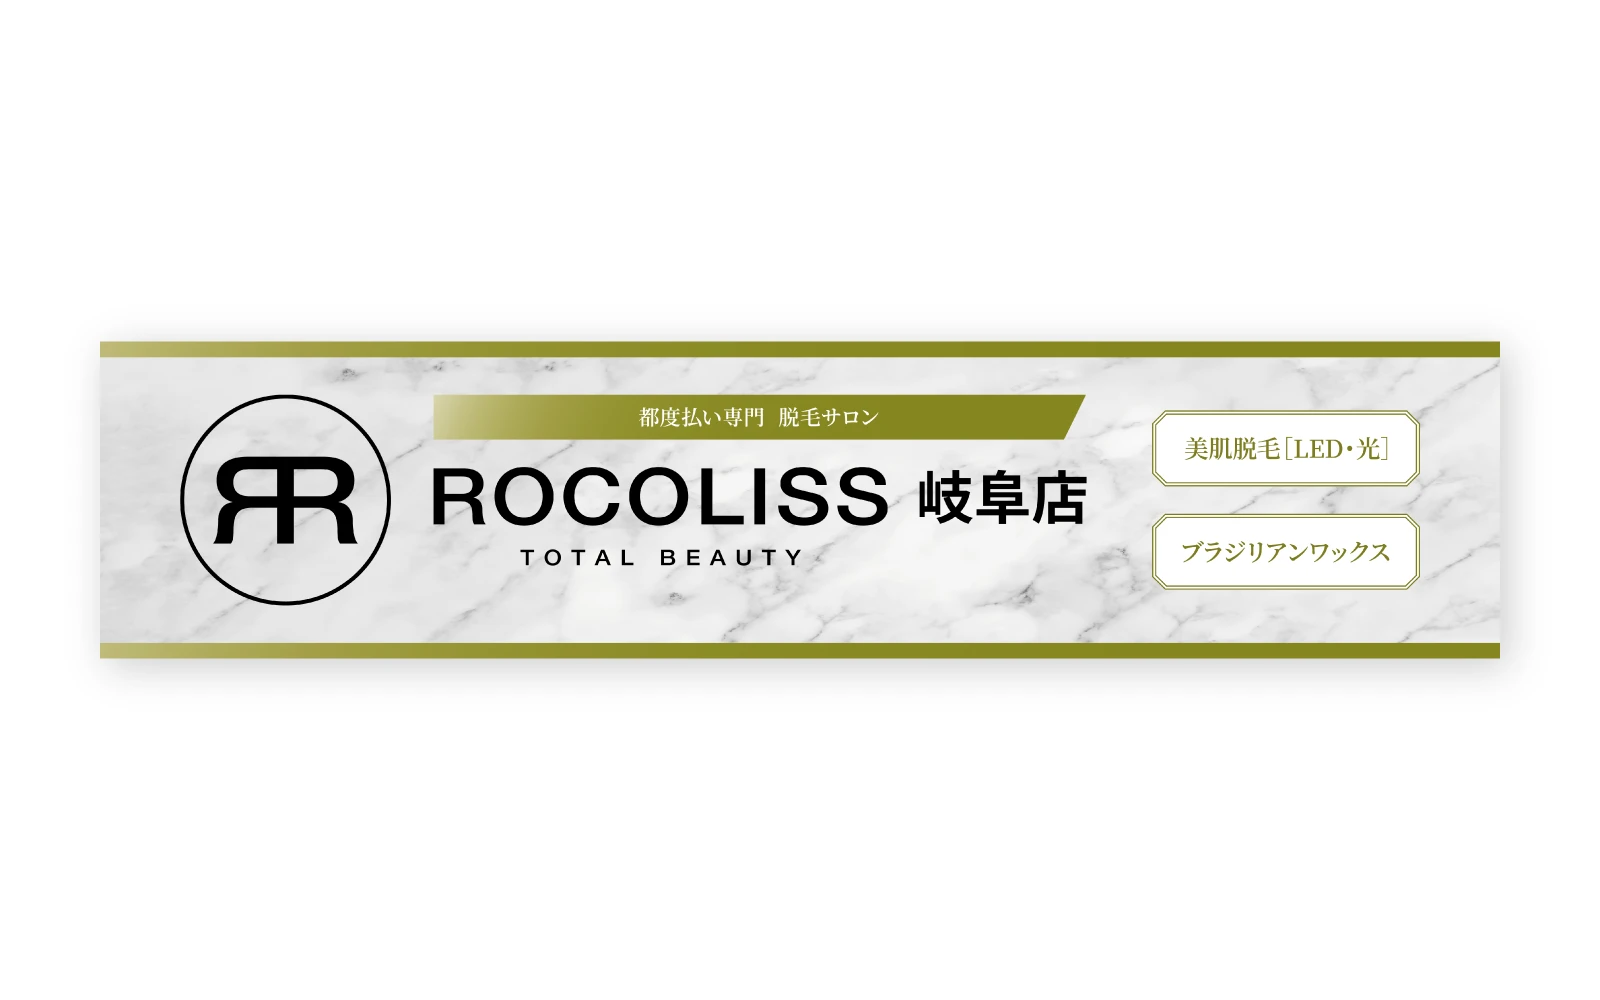 ROCOLISS TOTAL BEAUTY / 岐阜店店舗装飾デザイン